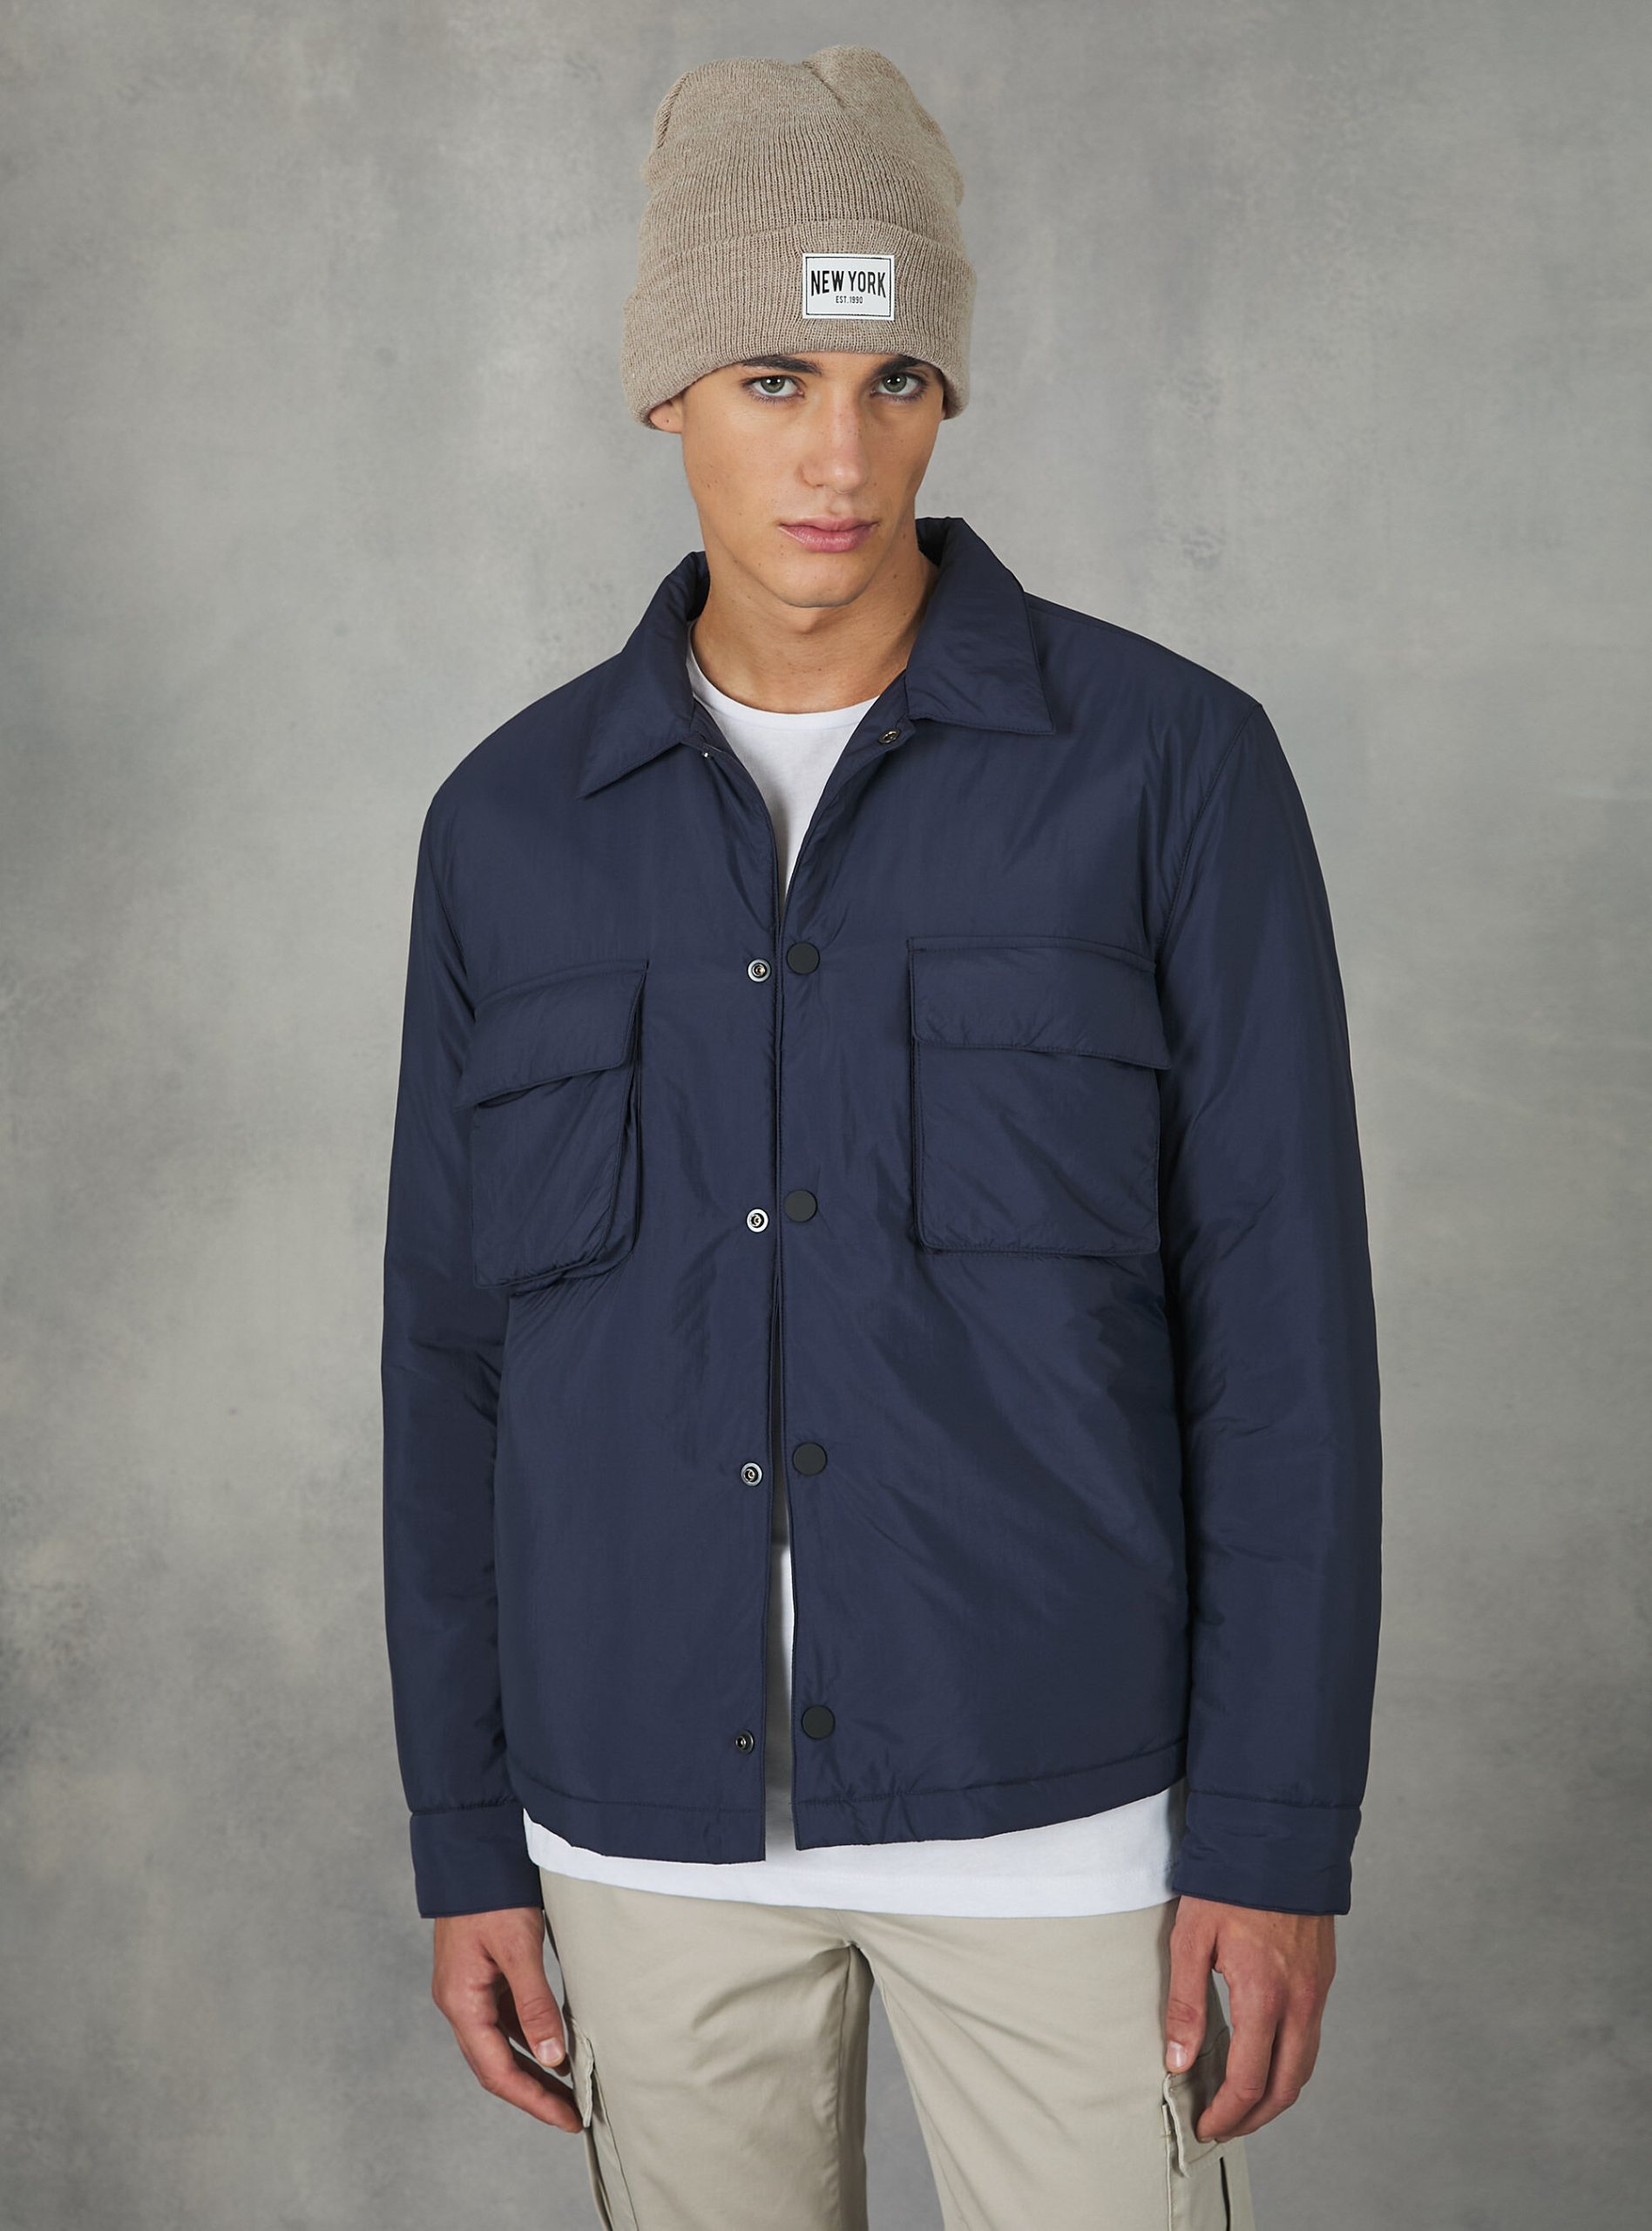 Jacket With Collar And Recycled Padding Mäntel Und Jacken Na2 Navy Medium Mode Alcott Männer – 2